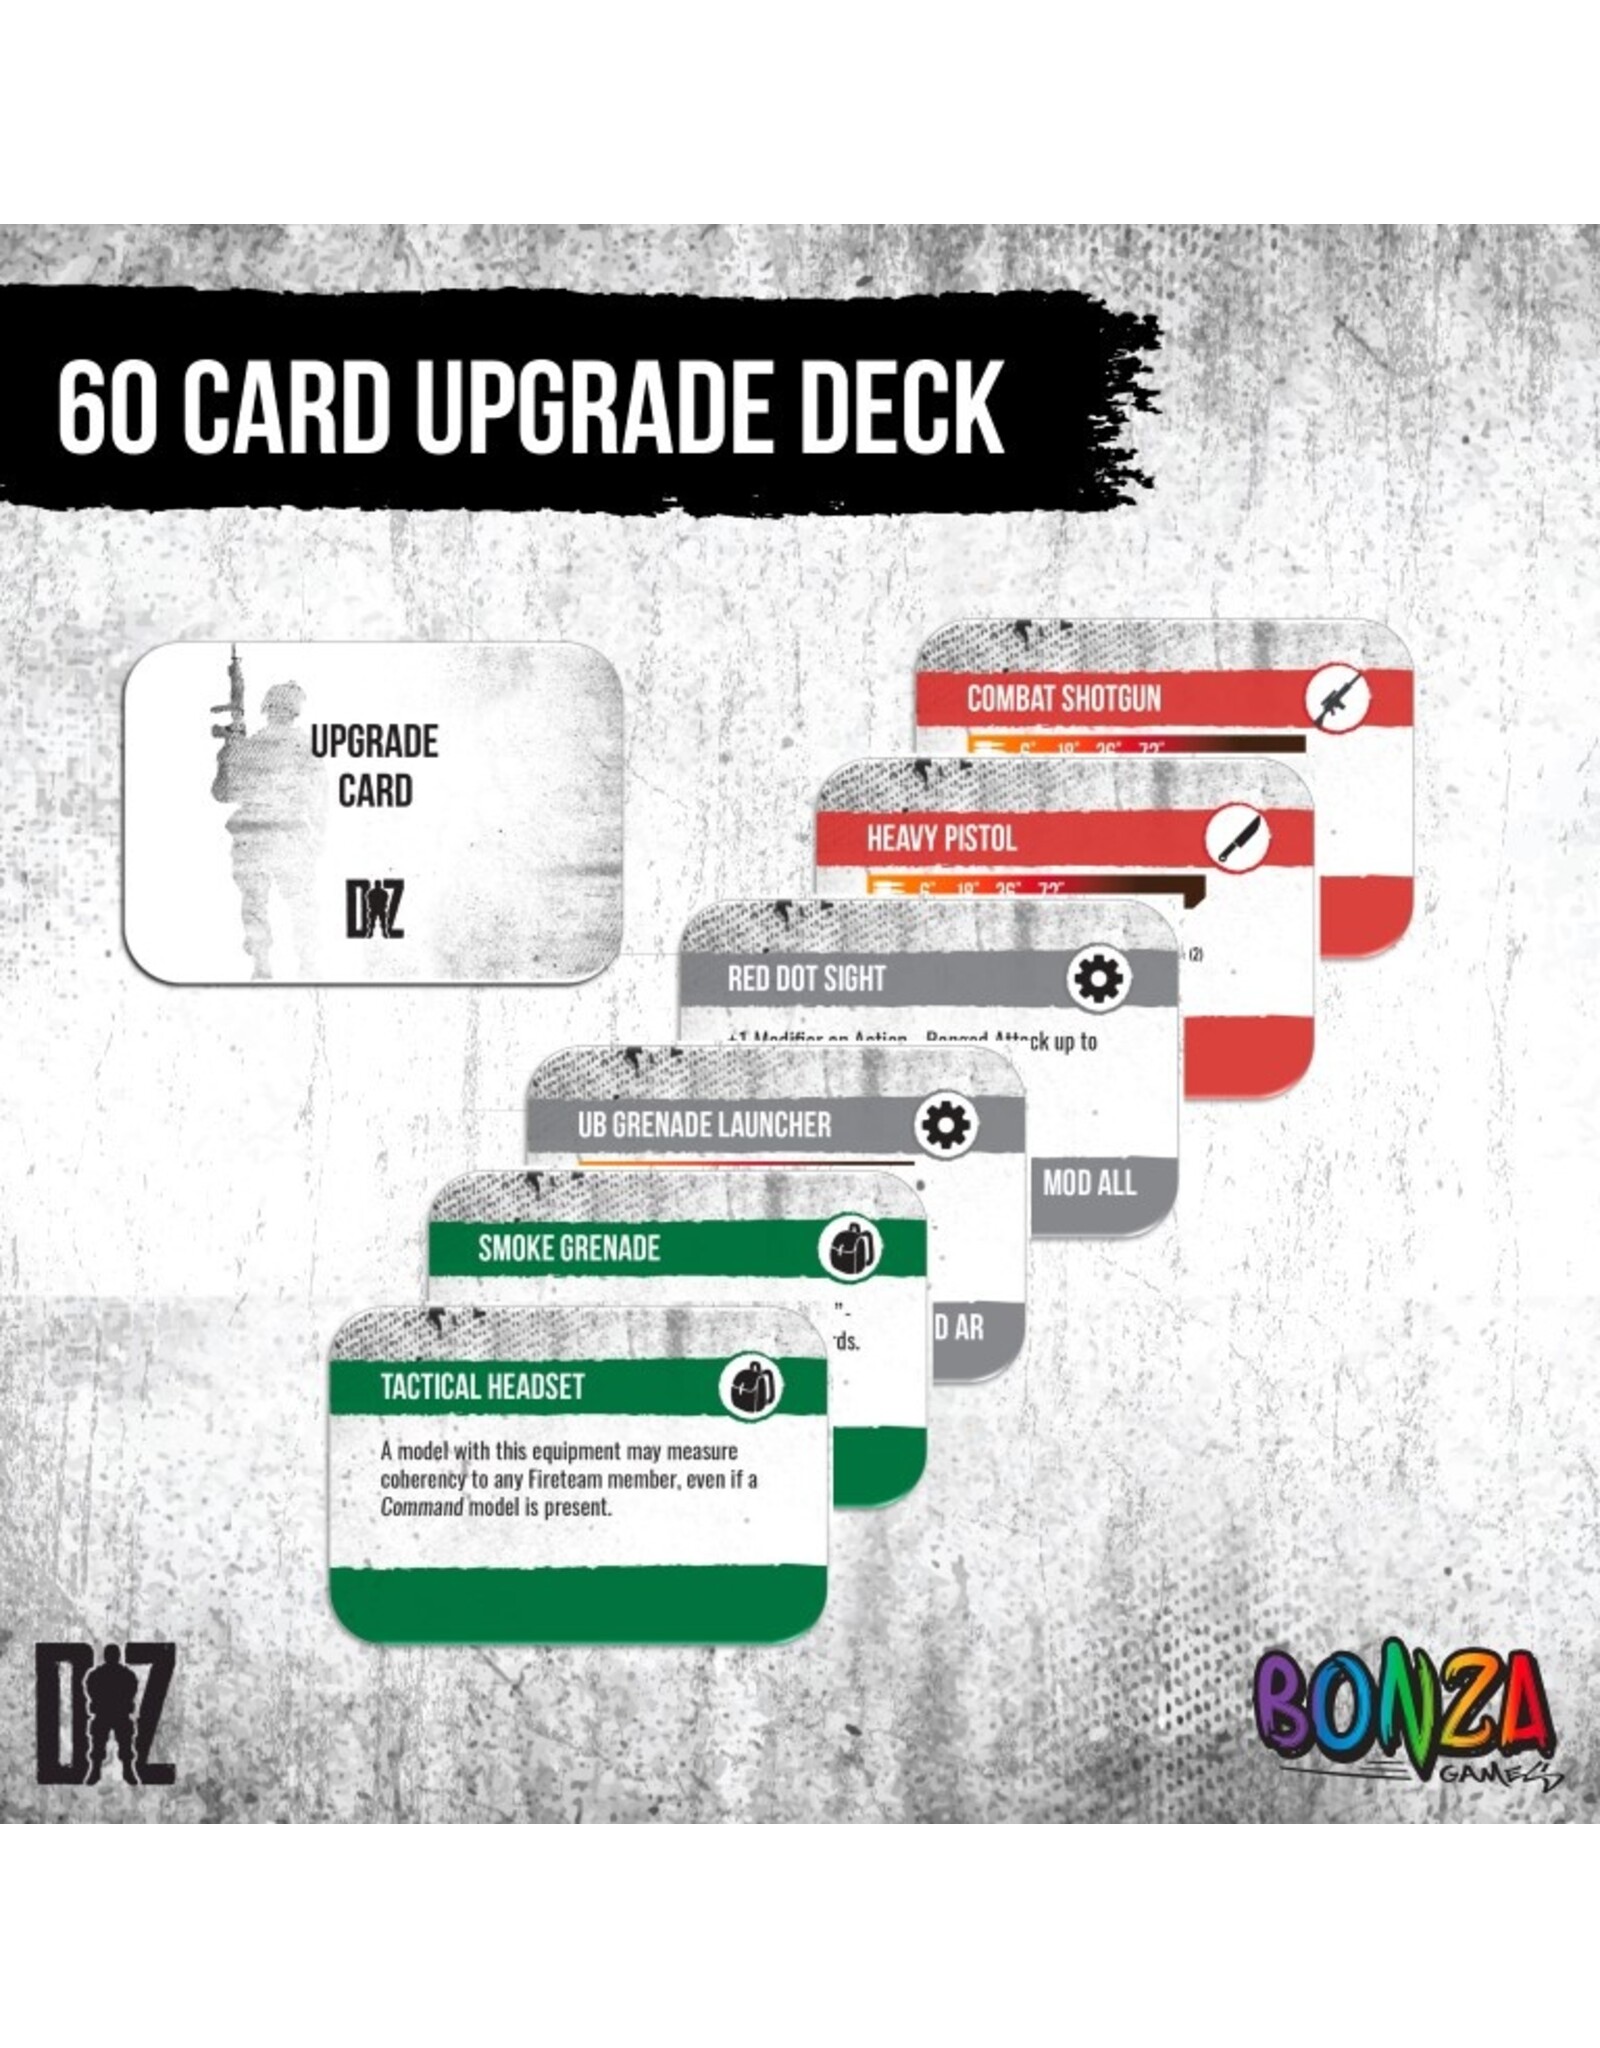 Bonza Delta One Zero Upgrade Cards